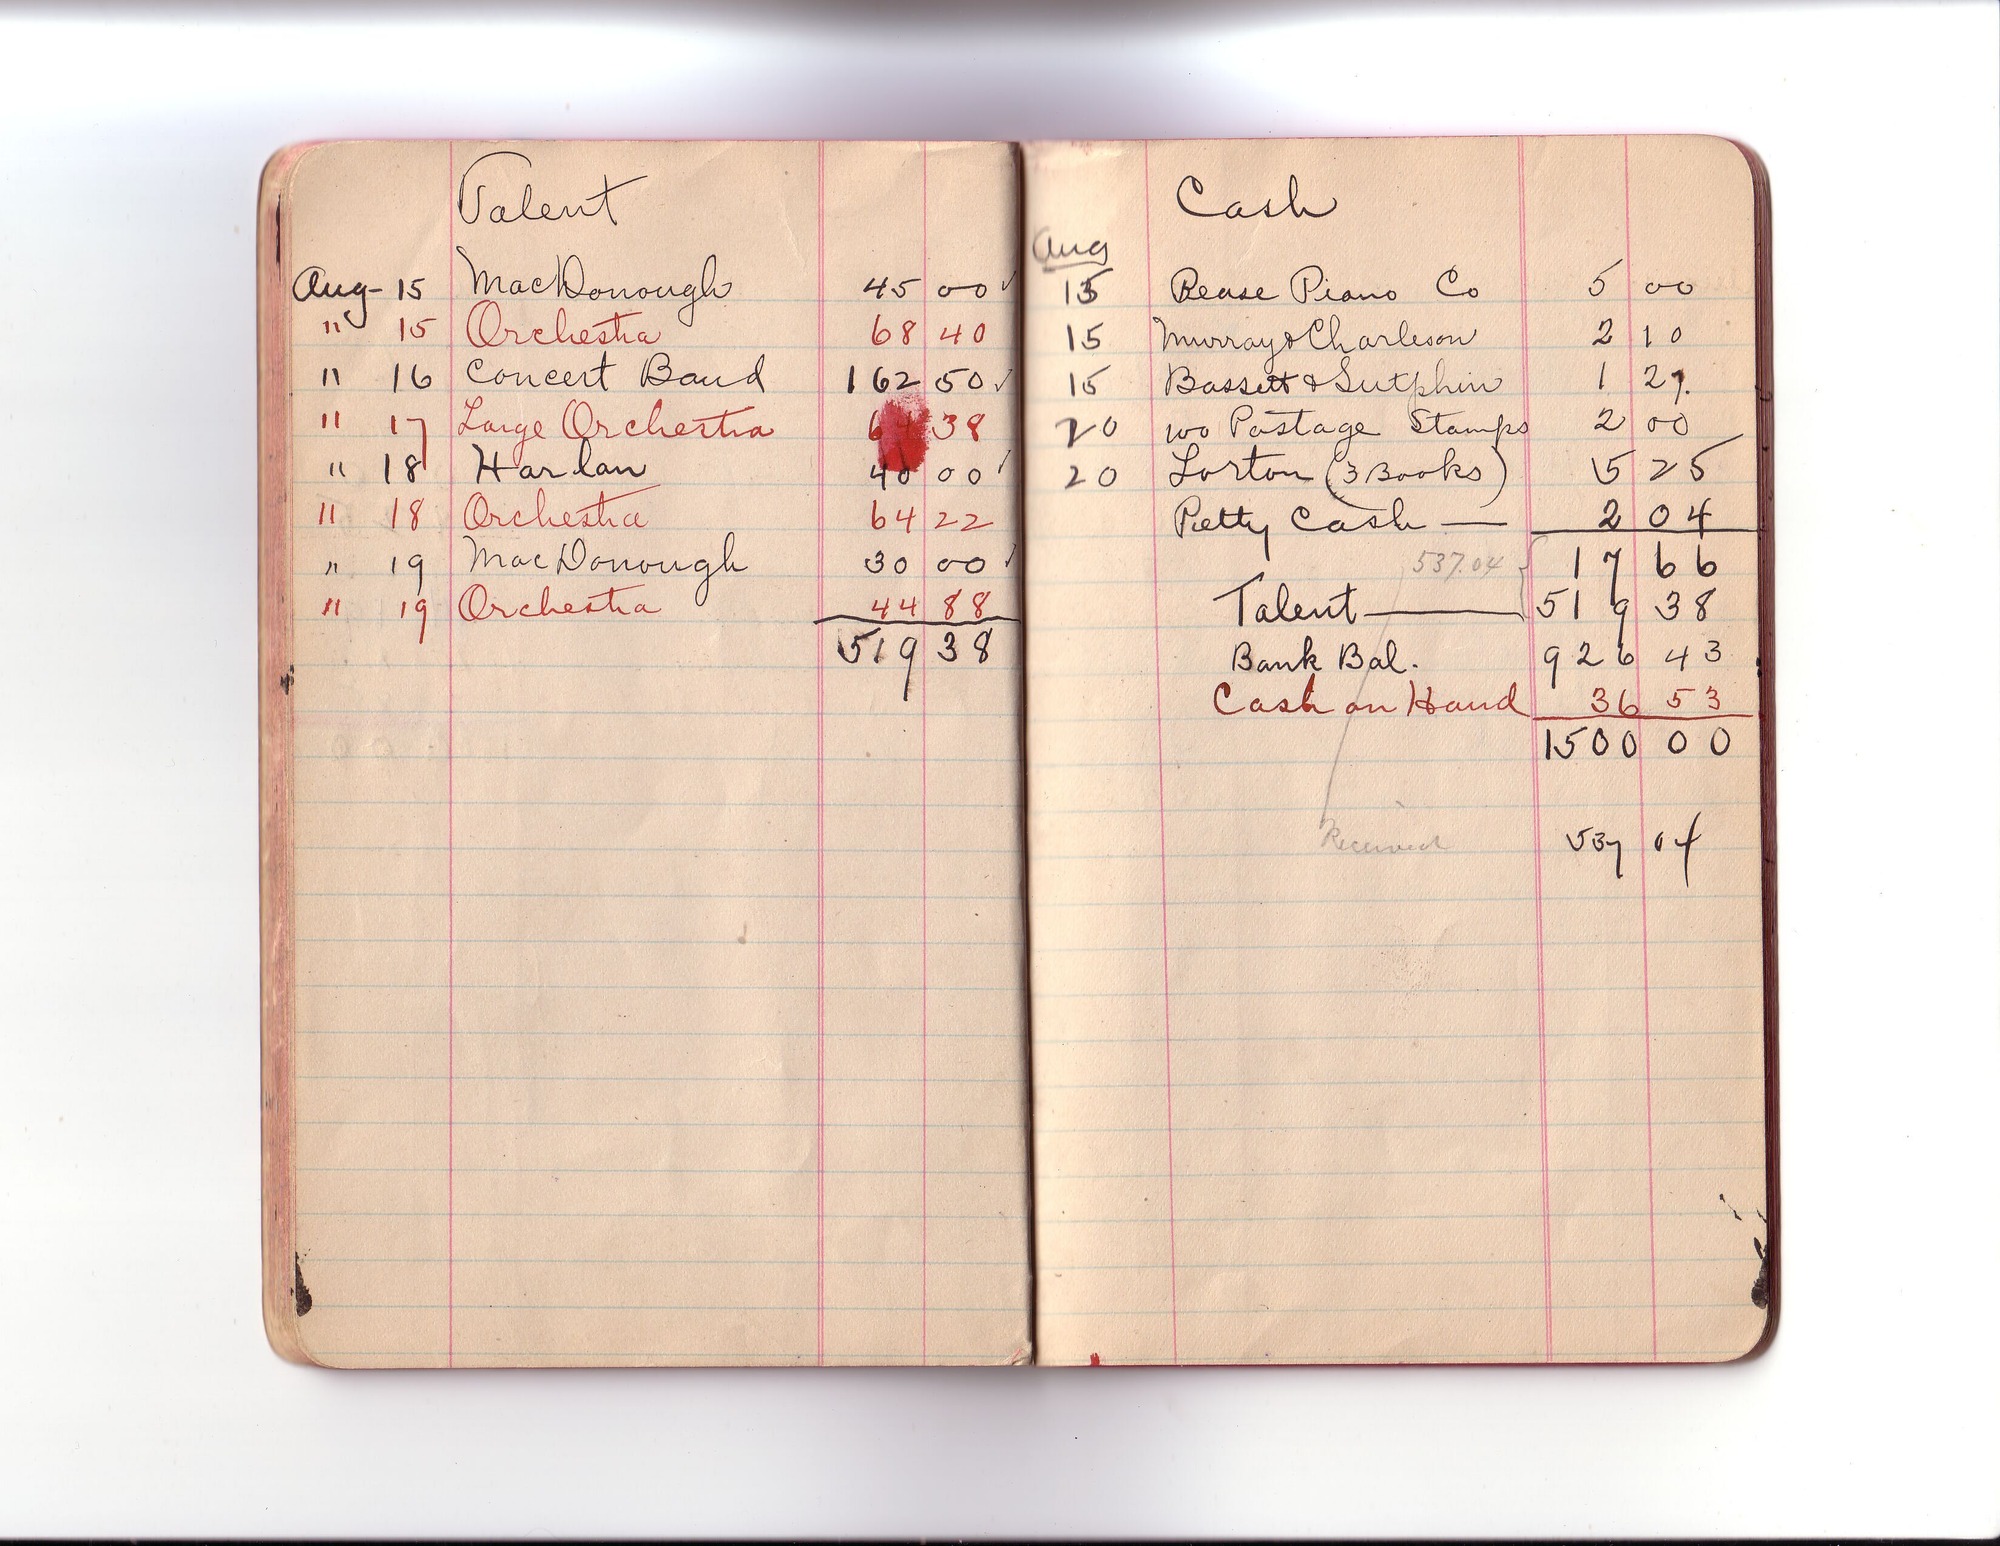 Thomas Edison's New York City Recording Studio Cash Book 01 (of 21), Image 23 (of 41).